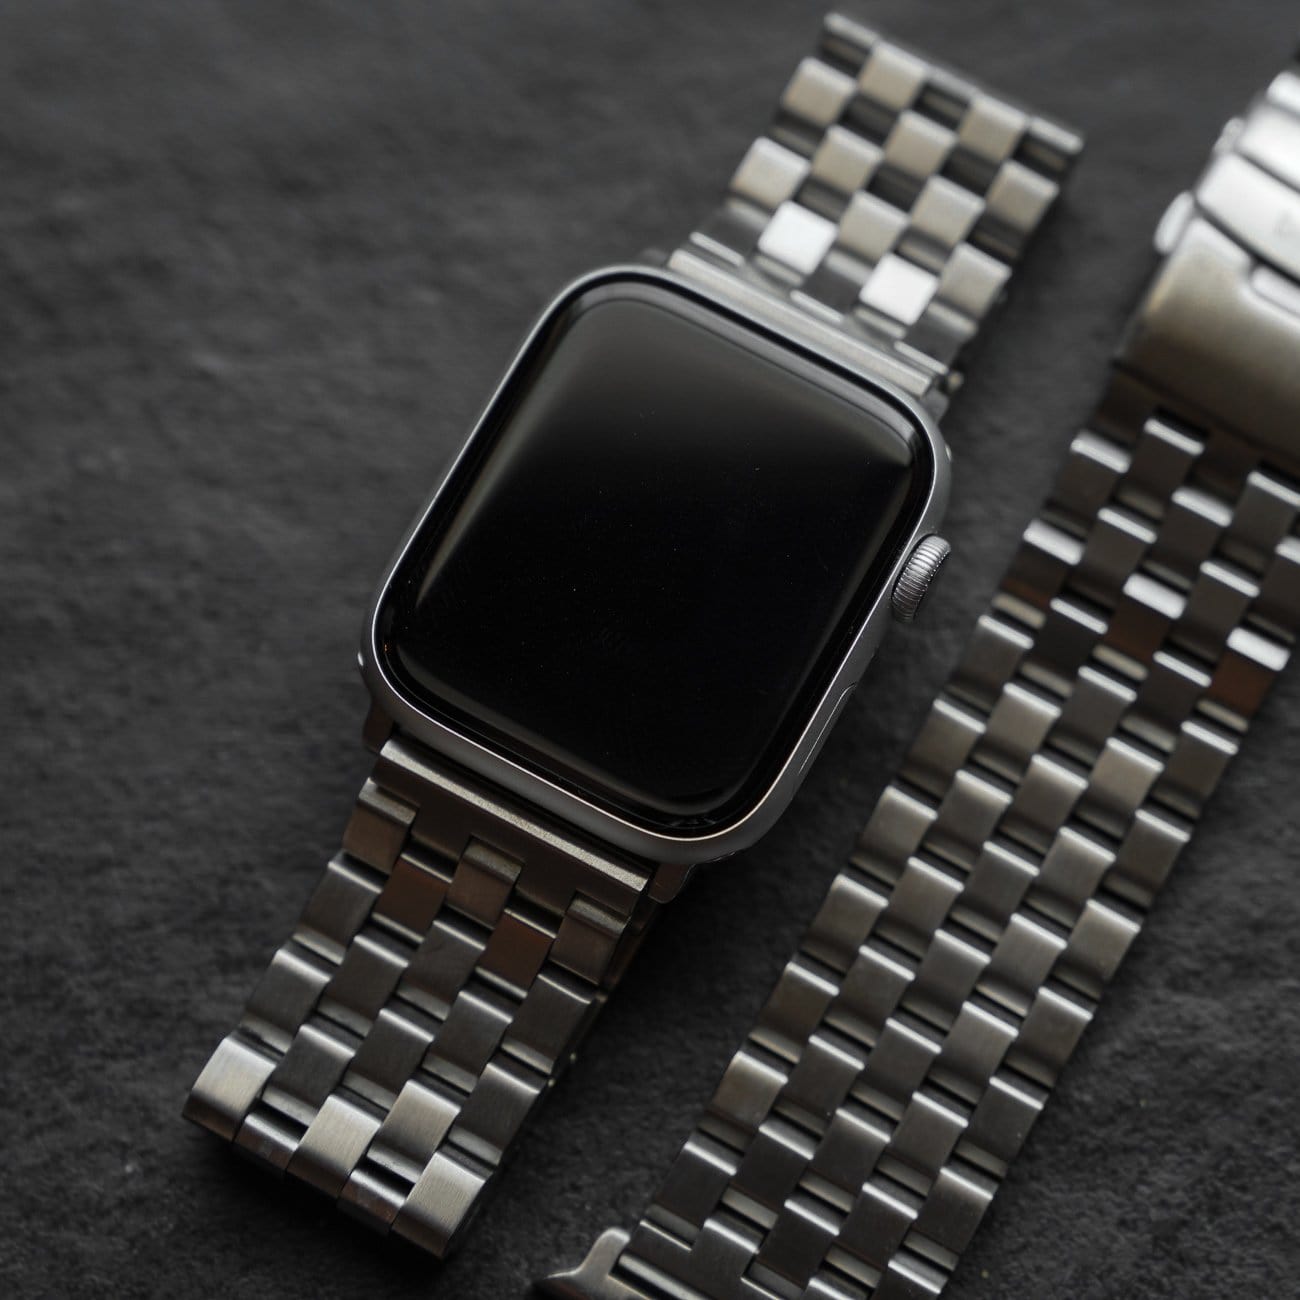 polish stainless steel apple watch